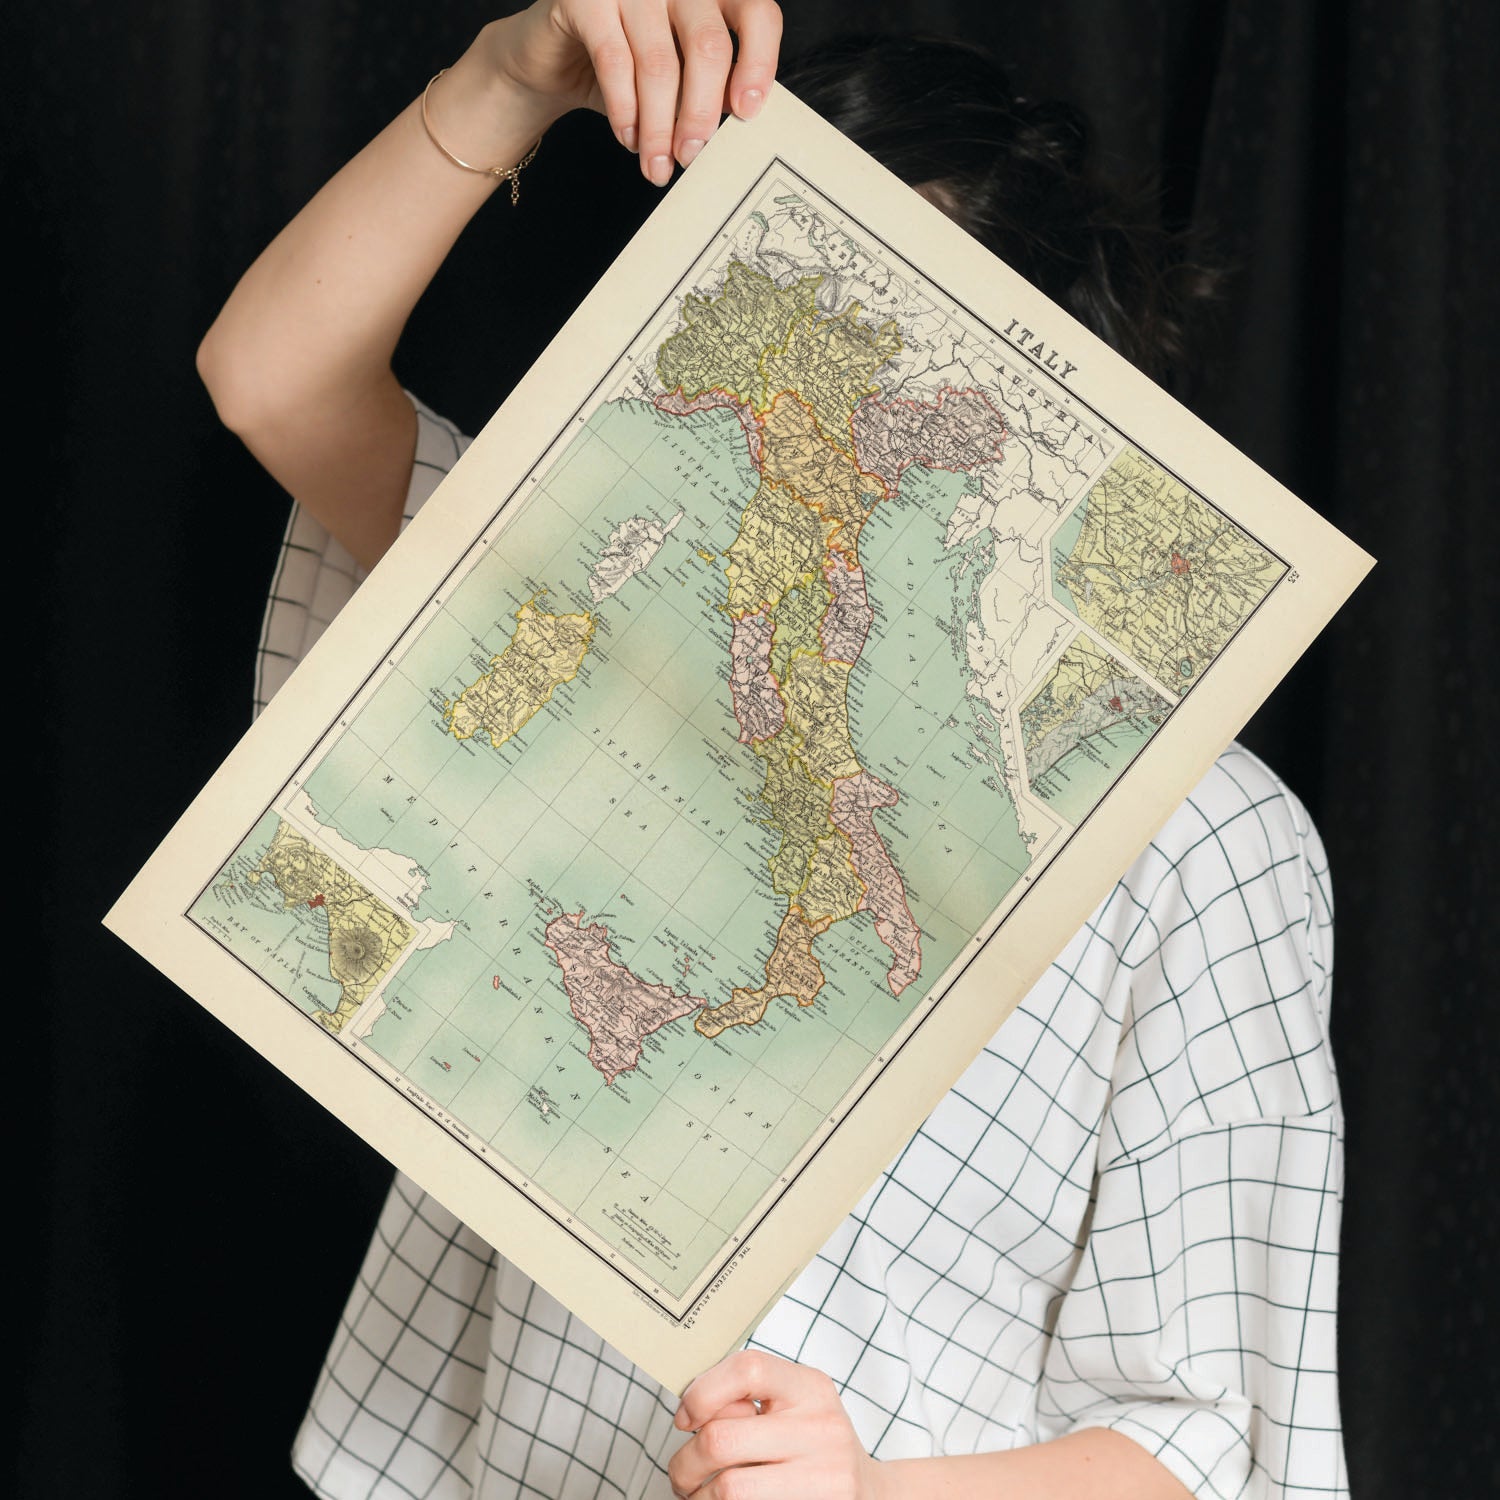 Vintage Map of Italy Citizen Atlas-Artwork-Nacnic-Nacnic Estudio SL